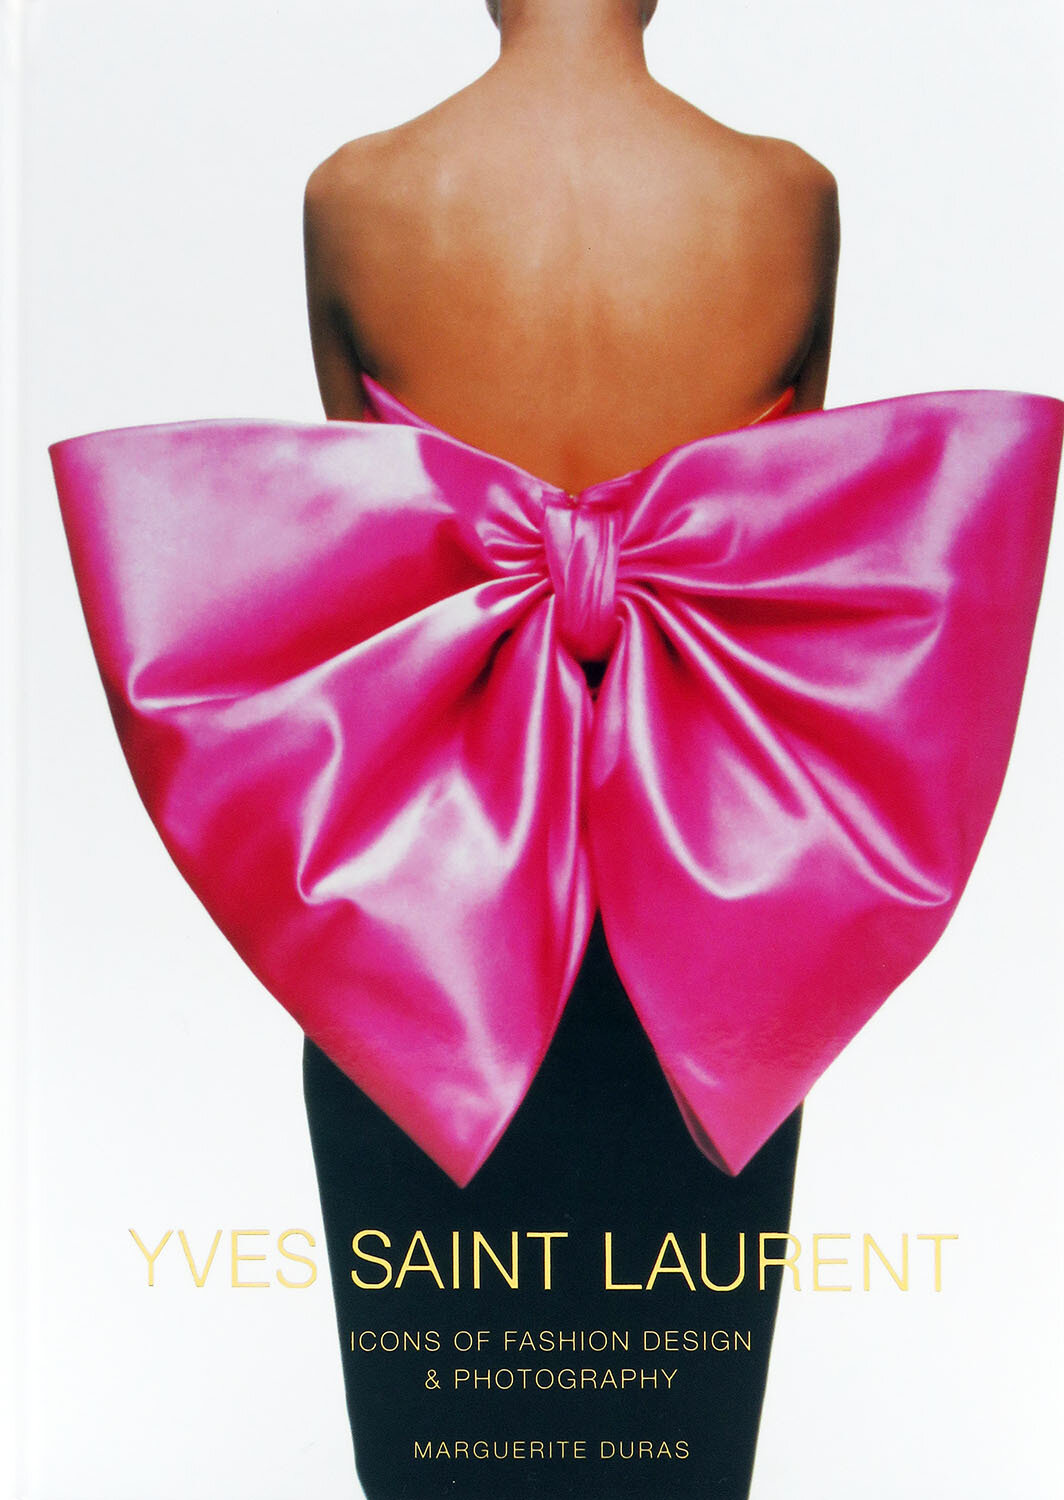 Yves Saint Laurent. Icons of Fashion Design